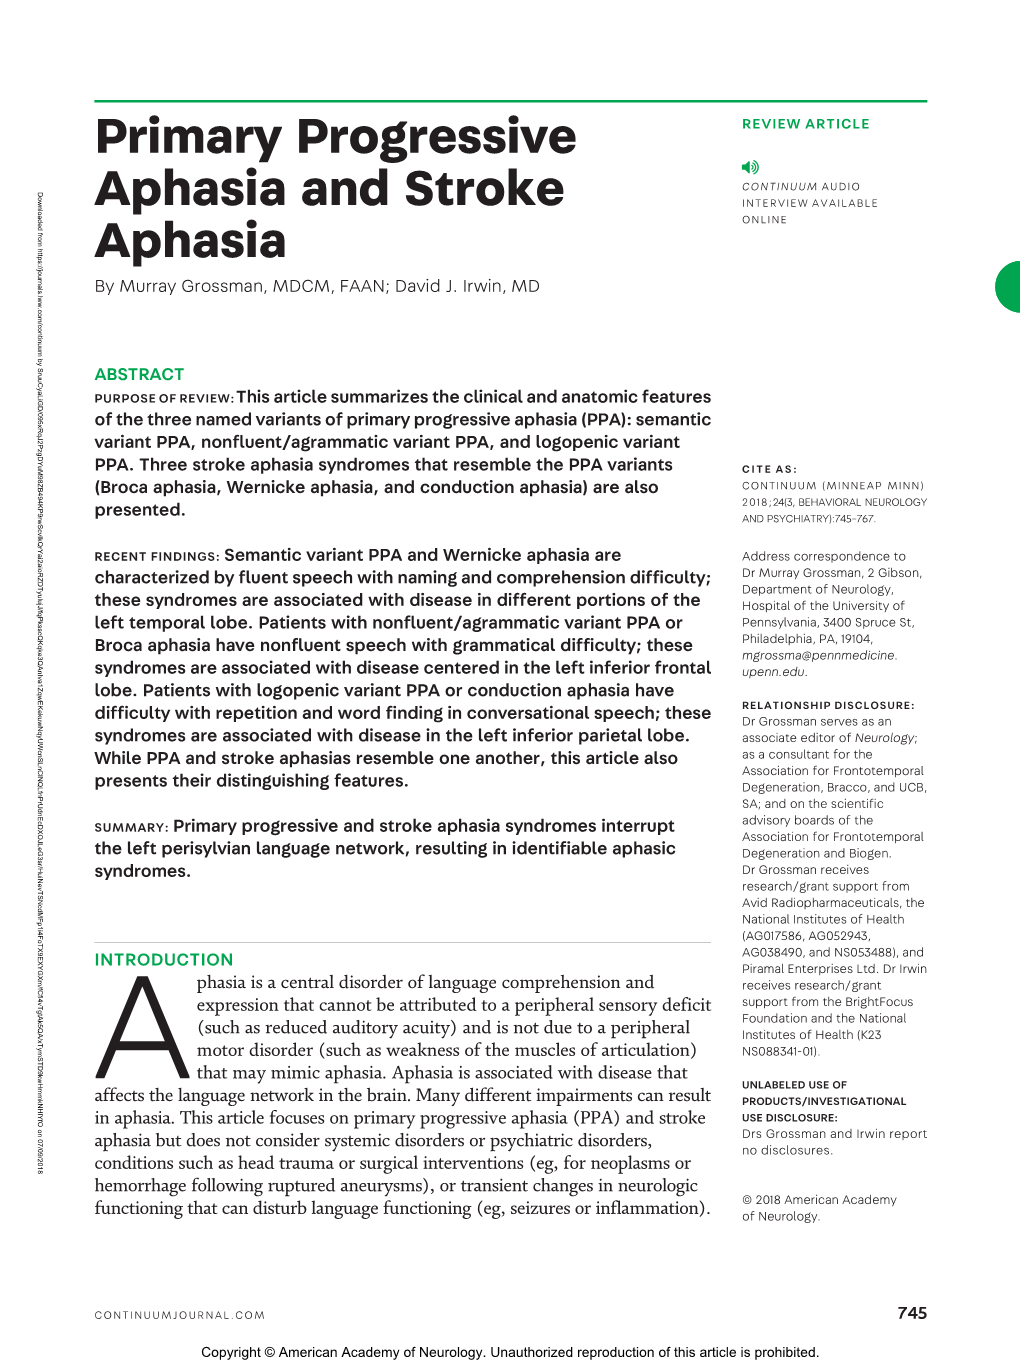 Primary Progressive Aphasia and Stroke Aphasia